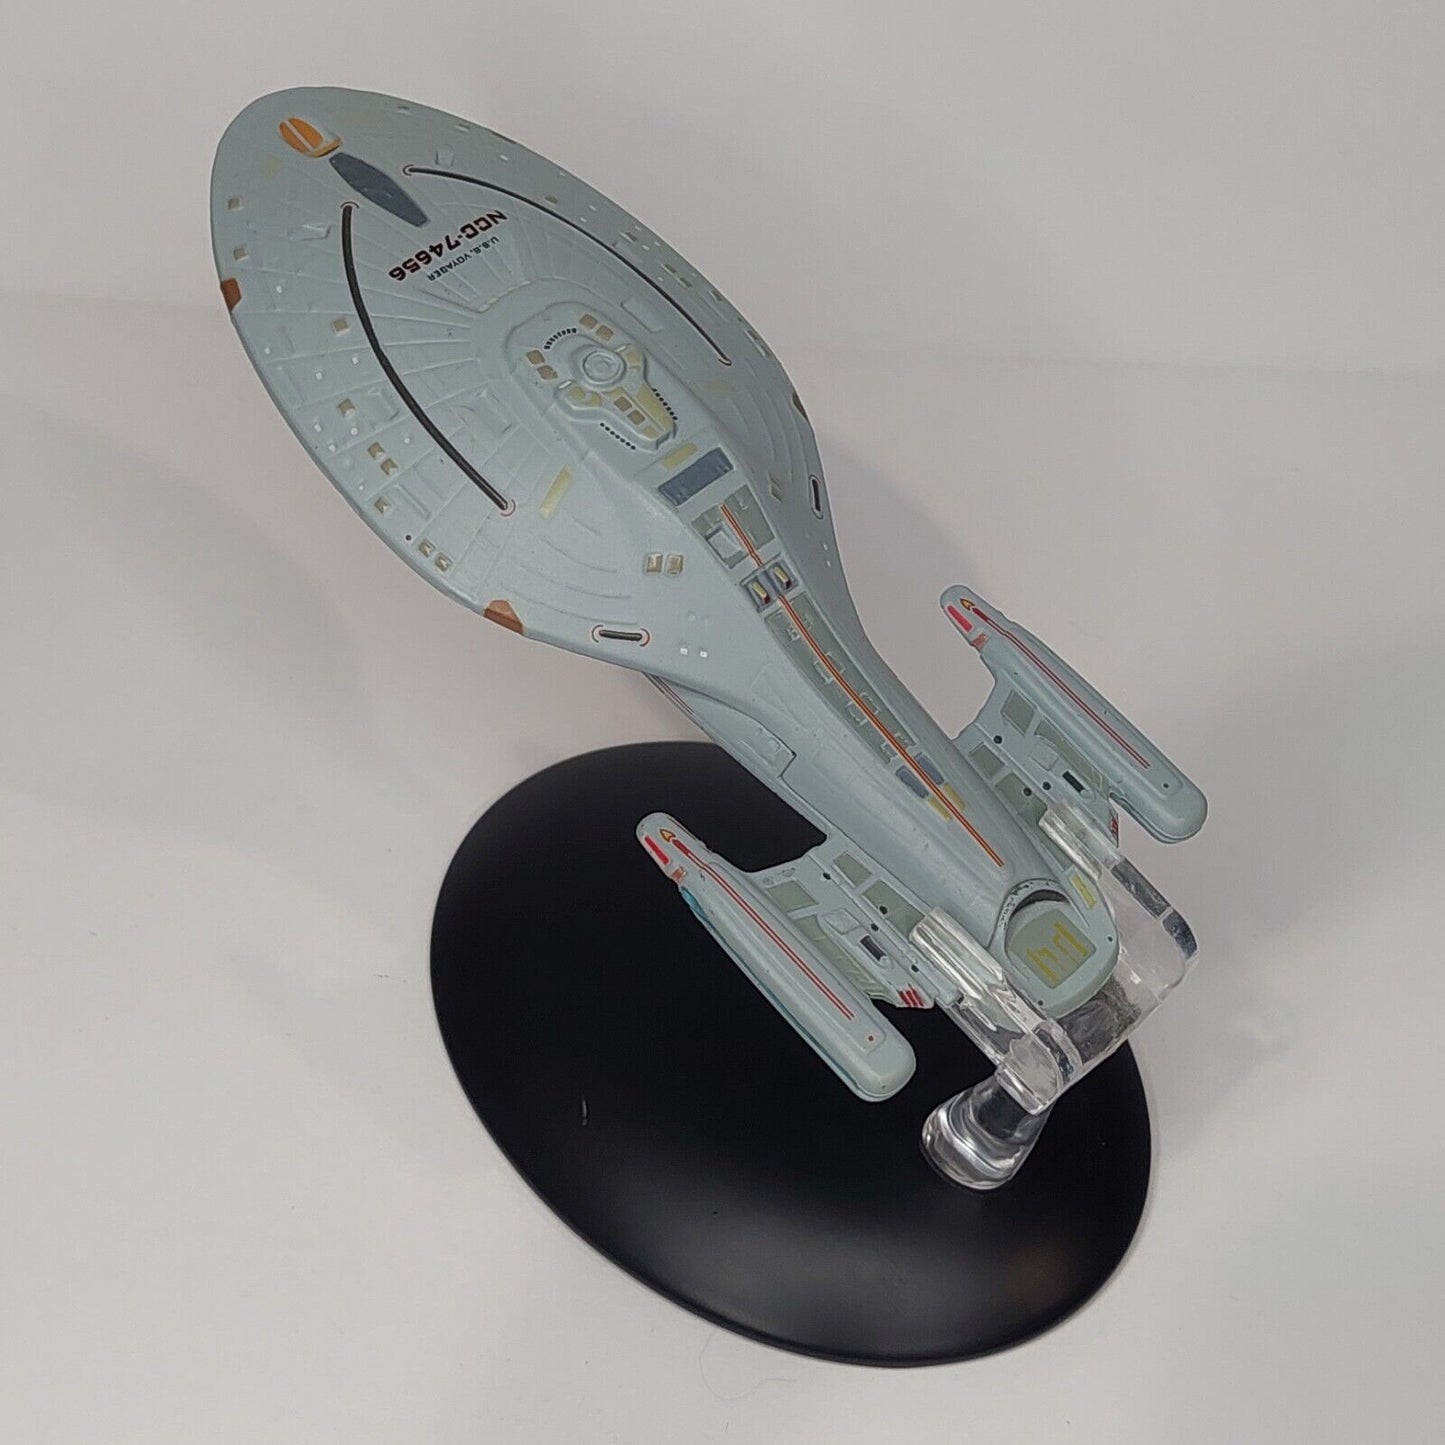 Star Trek Starships Collection #6 USS Voyager NCC-74656 diecast model